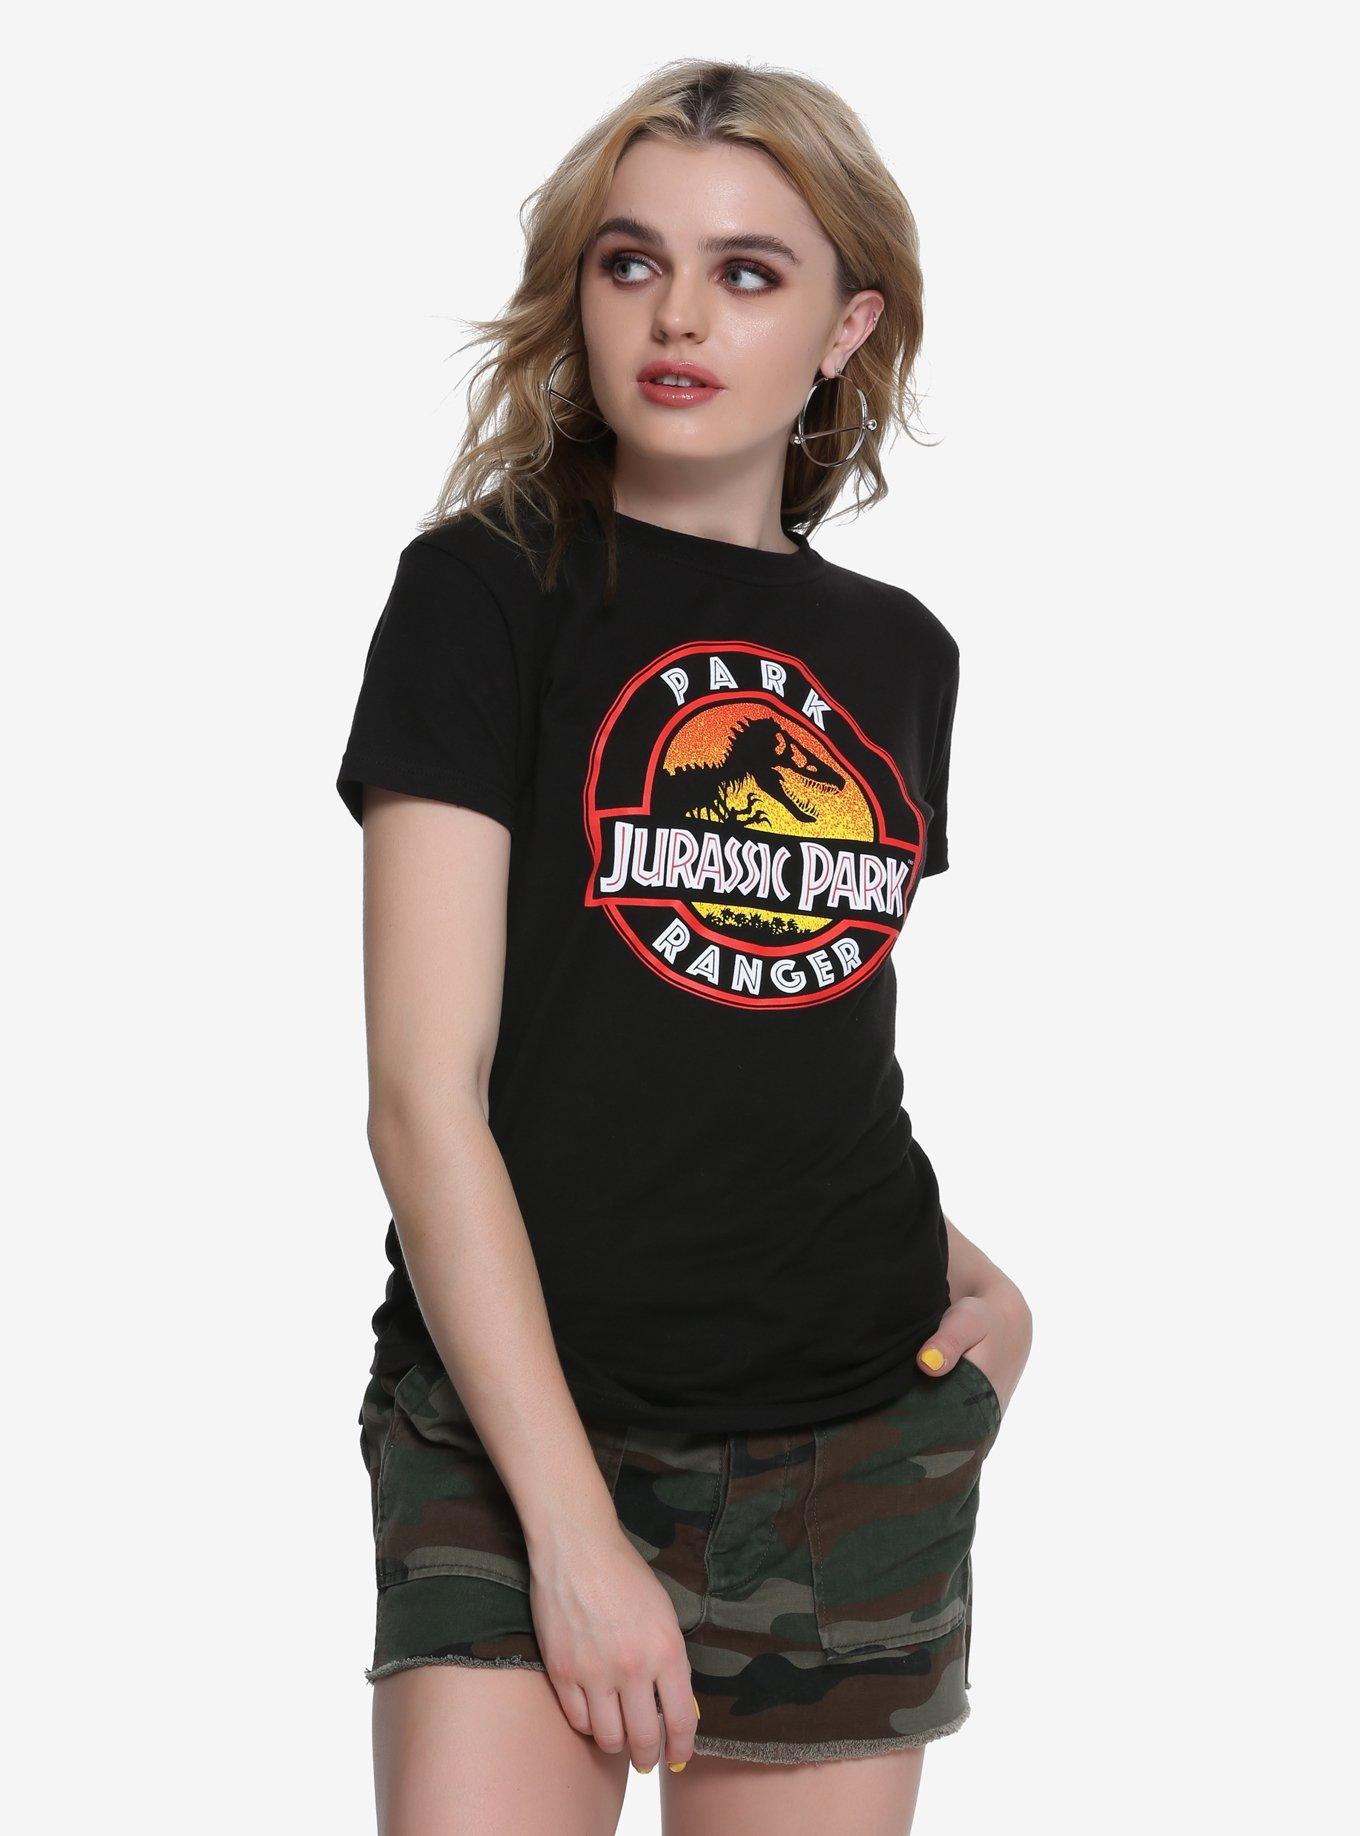 Jurassic Park Ranger Girls T-Shirt, HEATHER GREY, hi-res